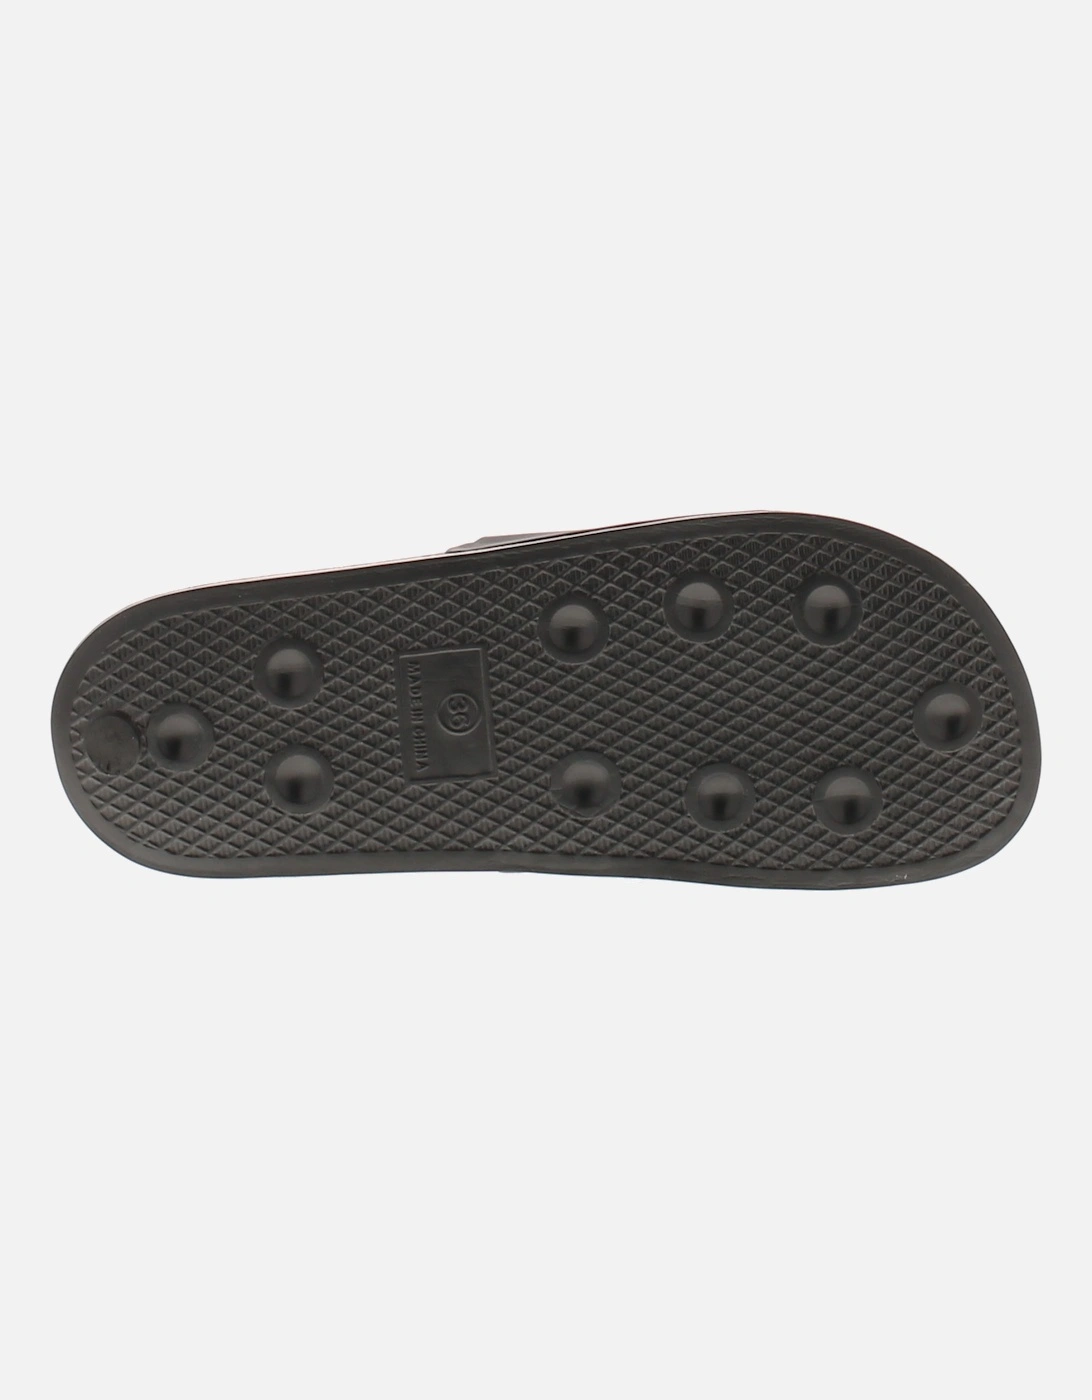 Childrens Sliders Pool Sandals Slider black UK Size